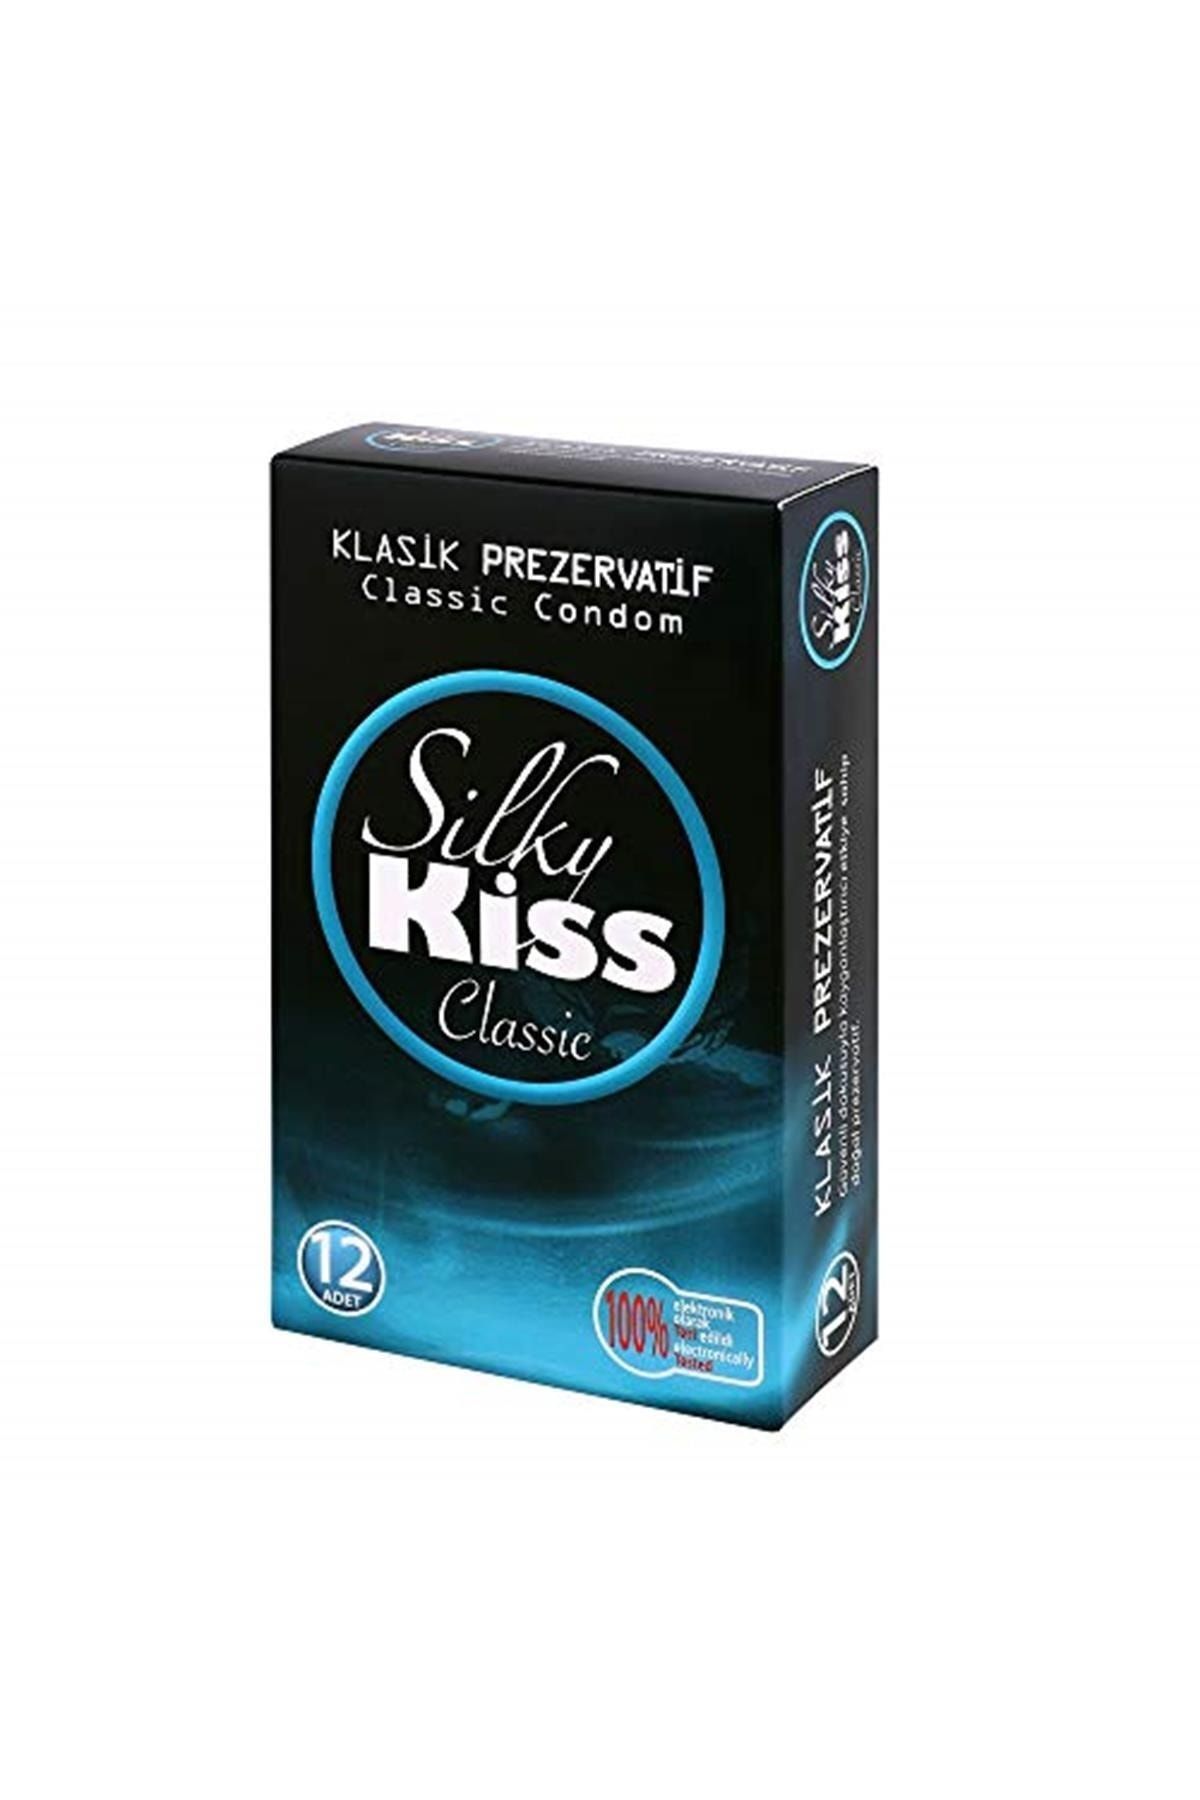 Silky Kiss Klasik Prezervatif 12'li Paket